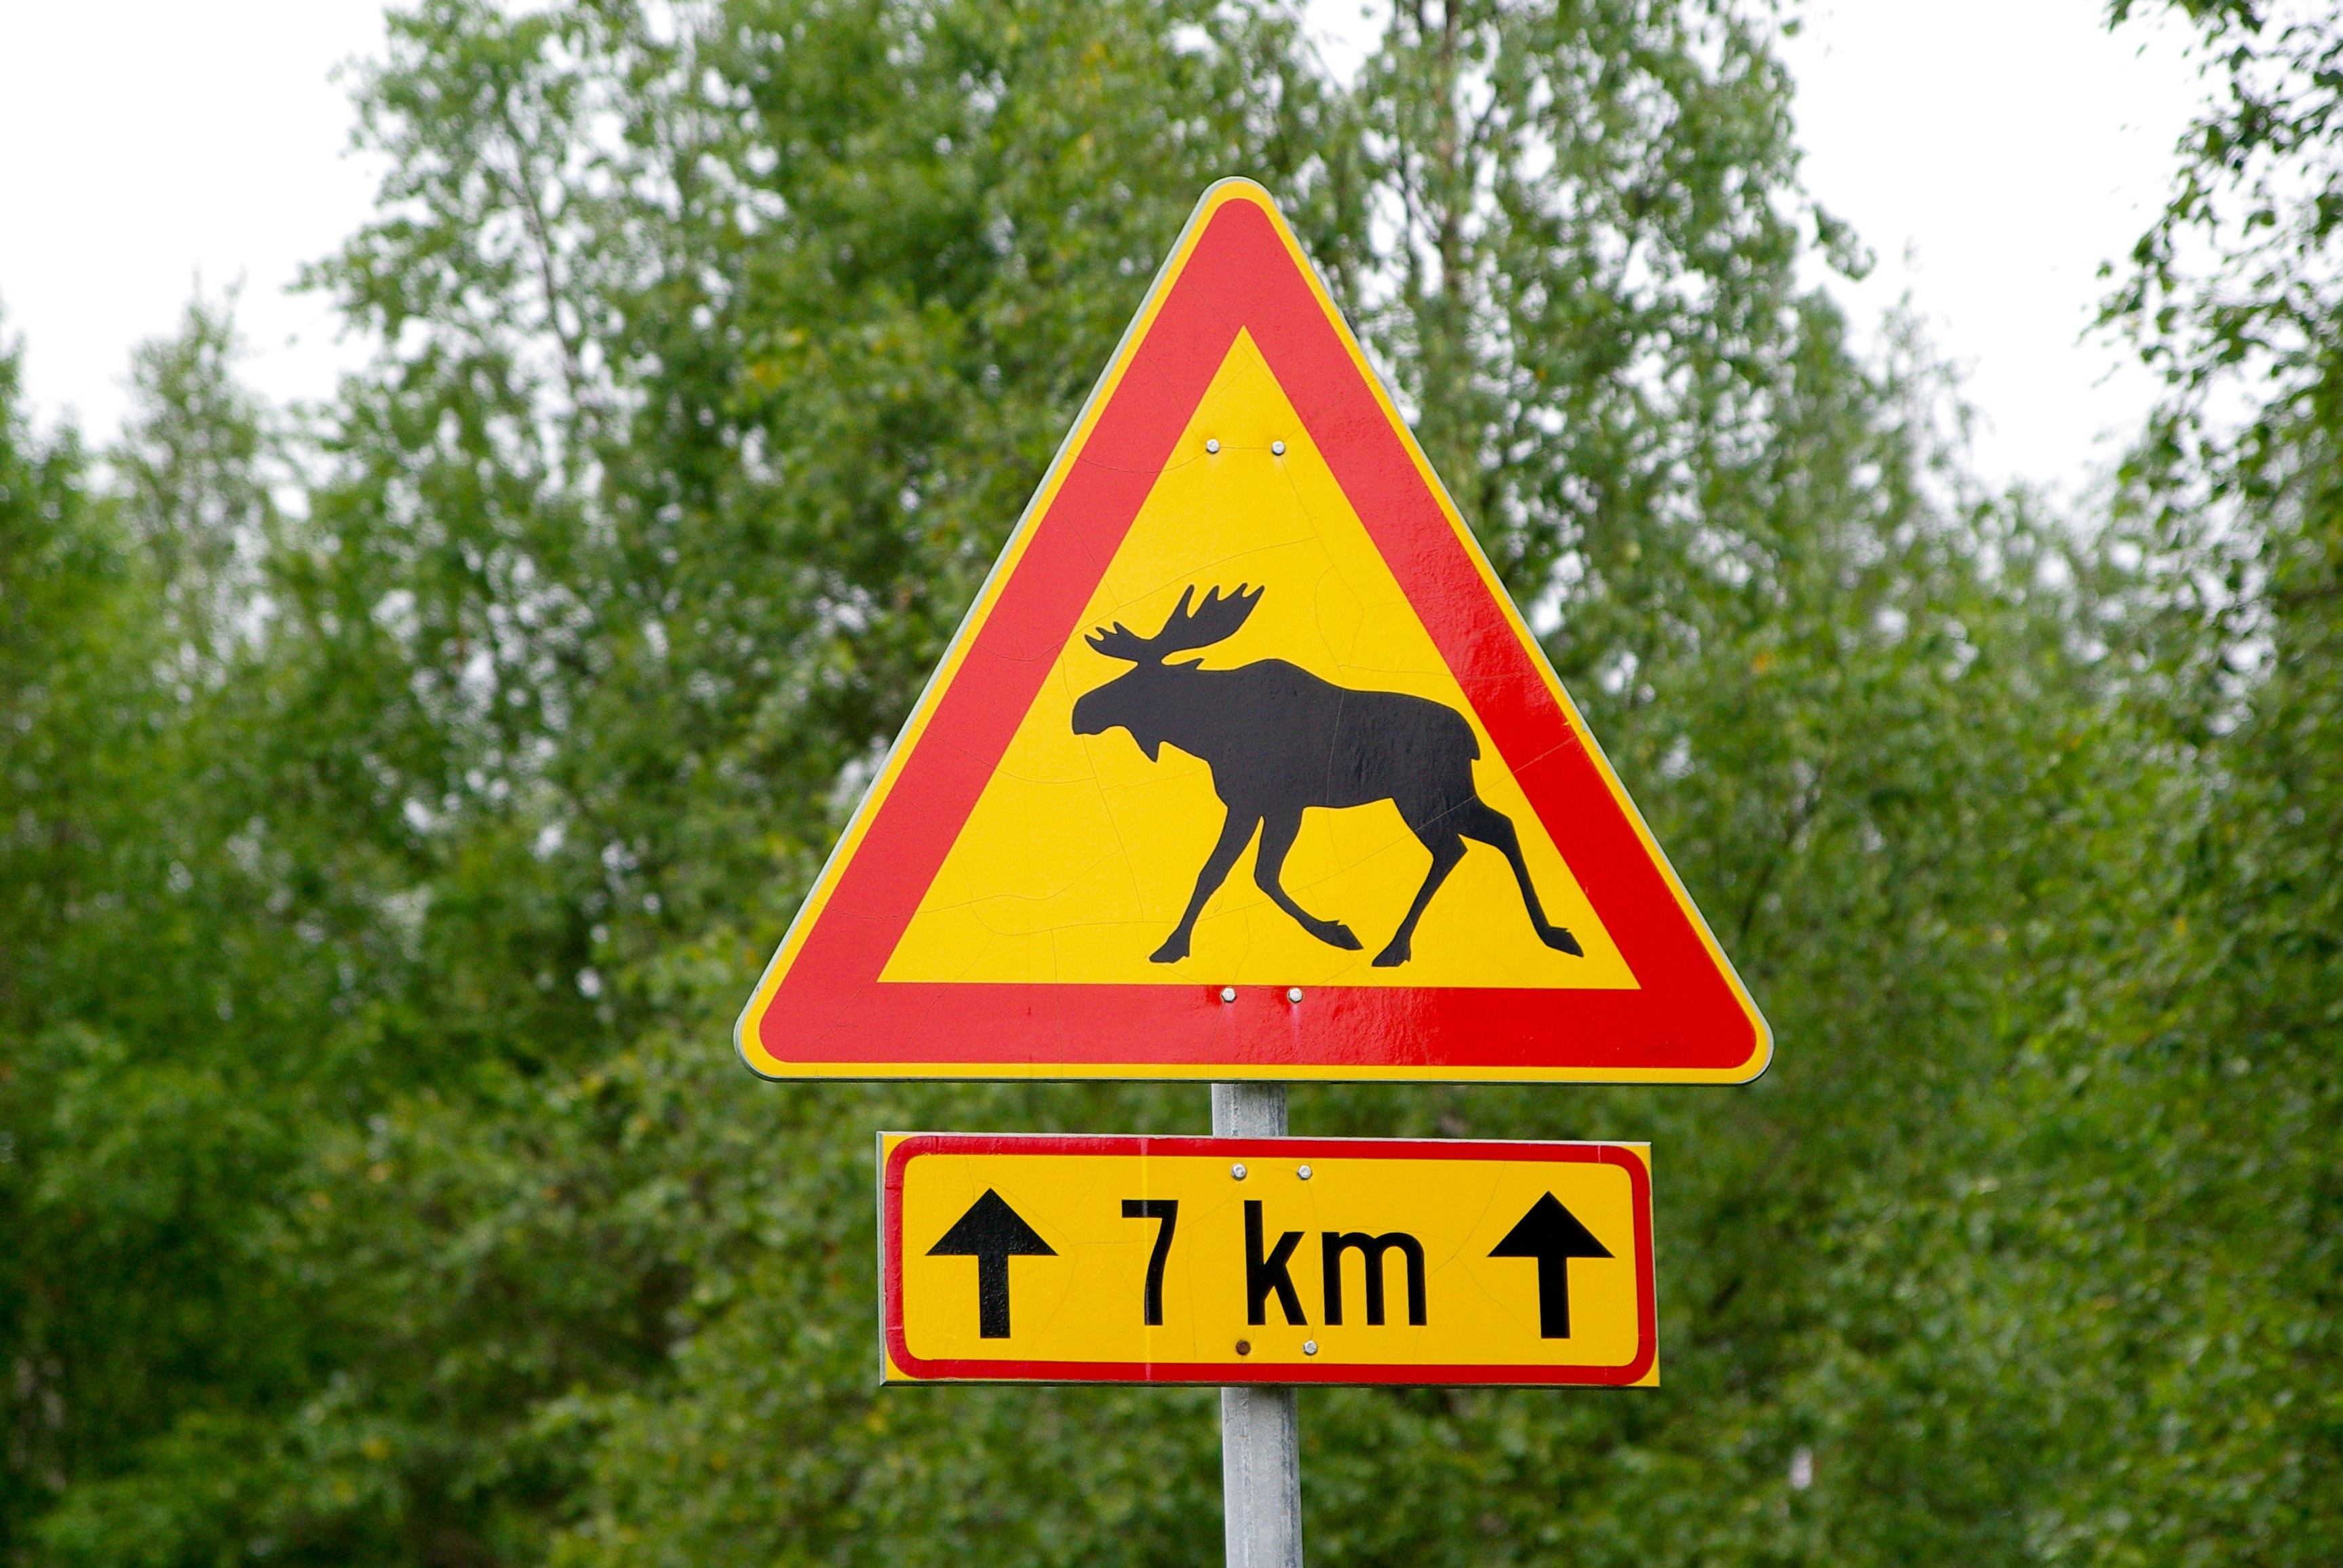 7 km ahead animal crossing road signage